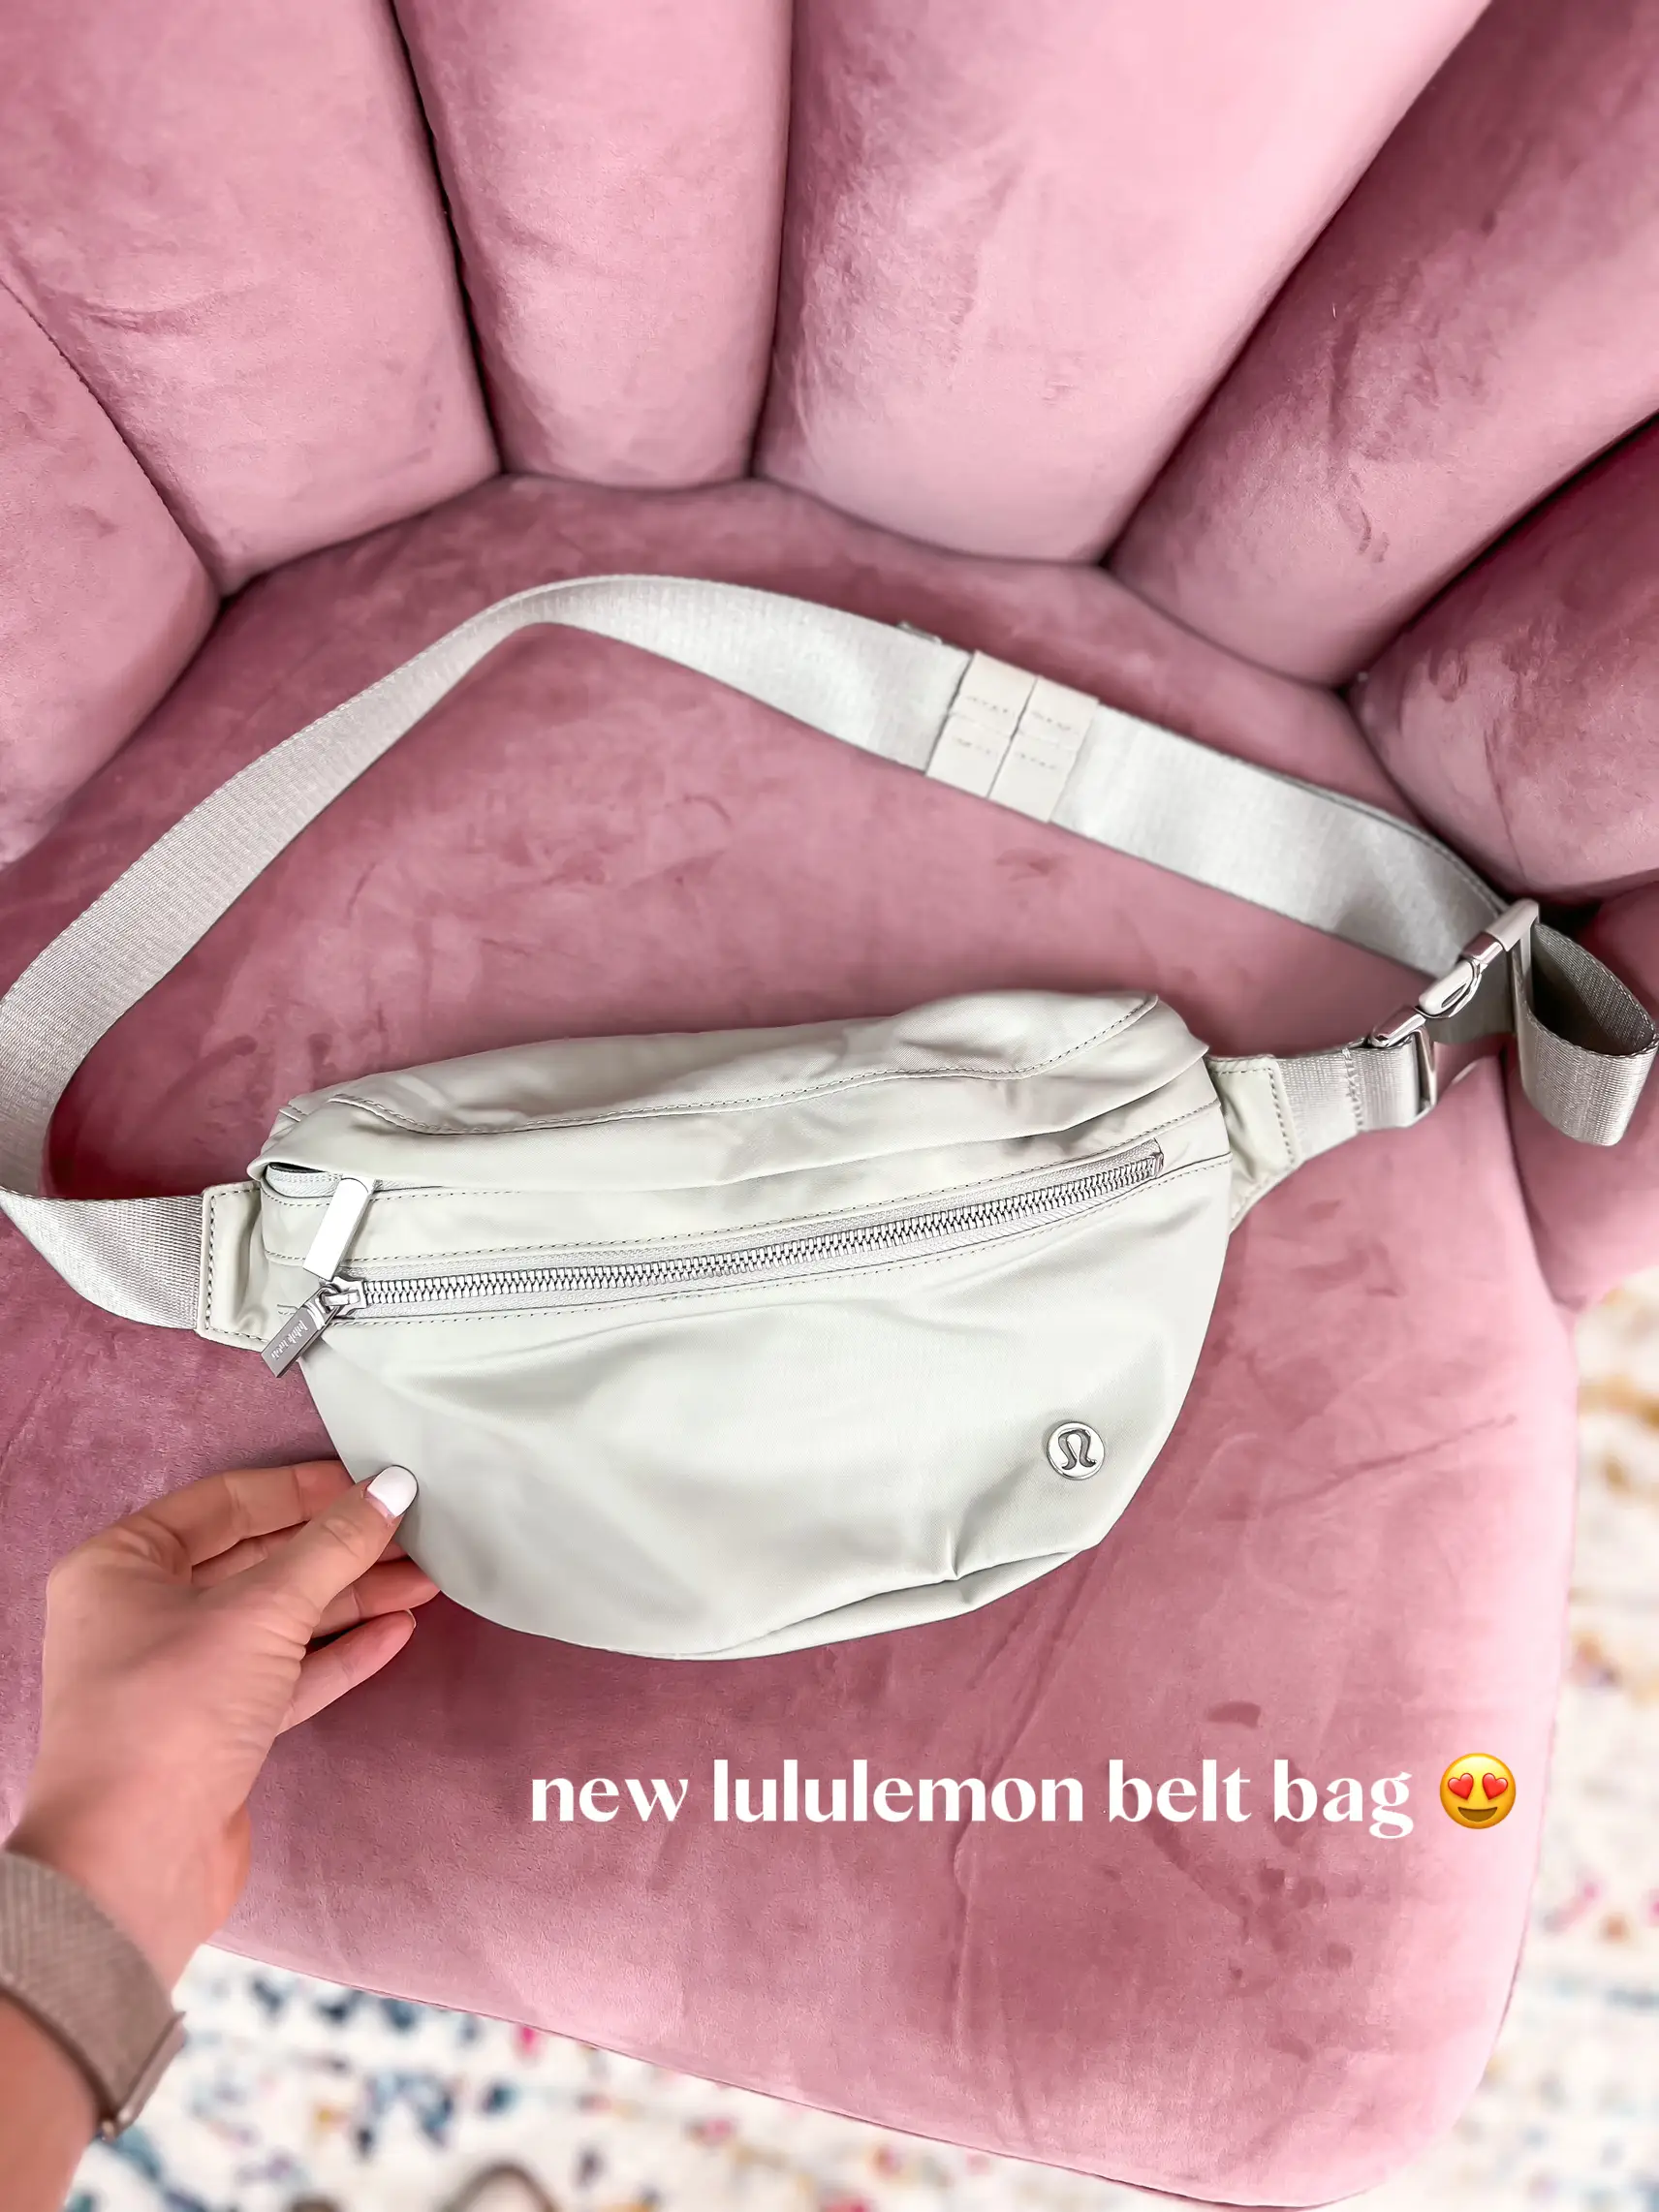 New lululemon belt bag!!!, Gallery posted by Lauren Romano